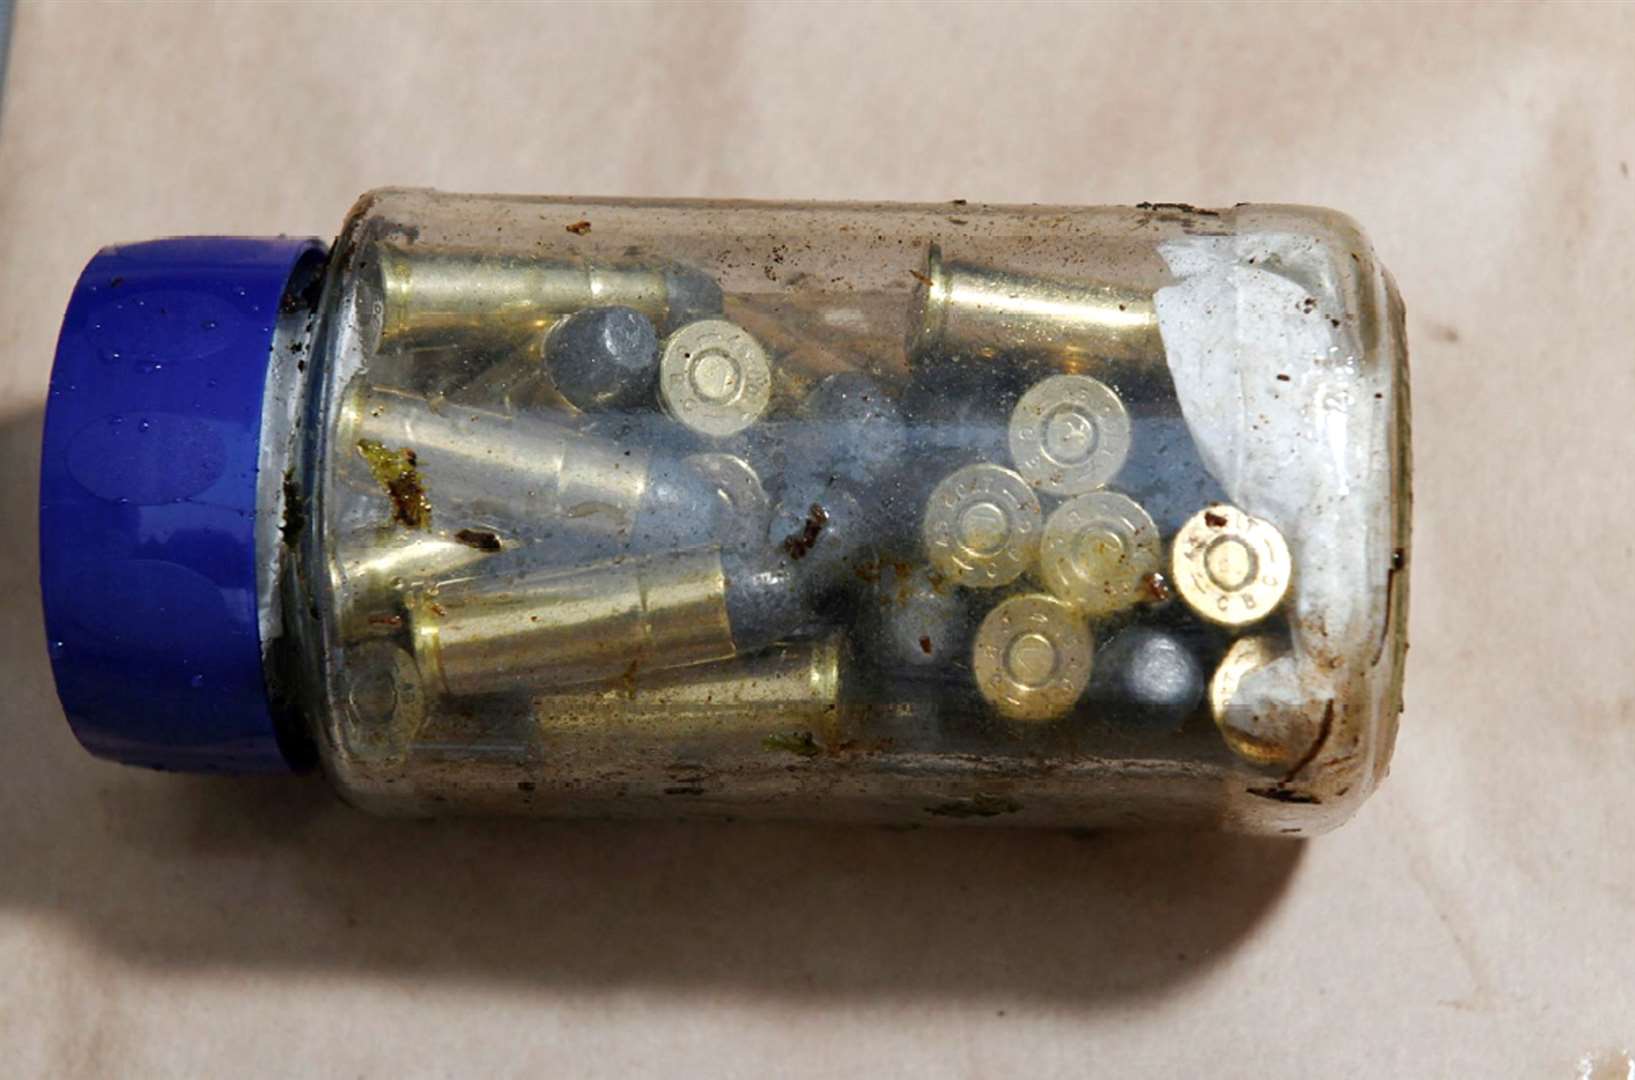 Ammunition recovered by police (PSNI/PA)